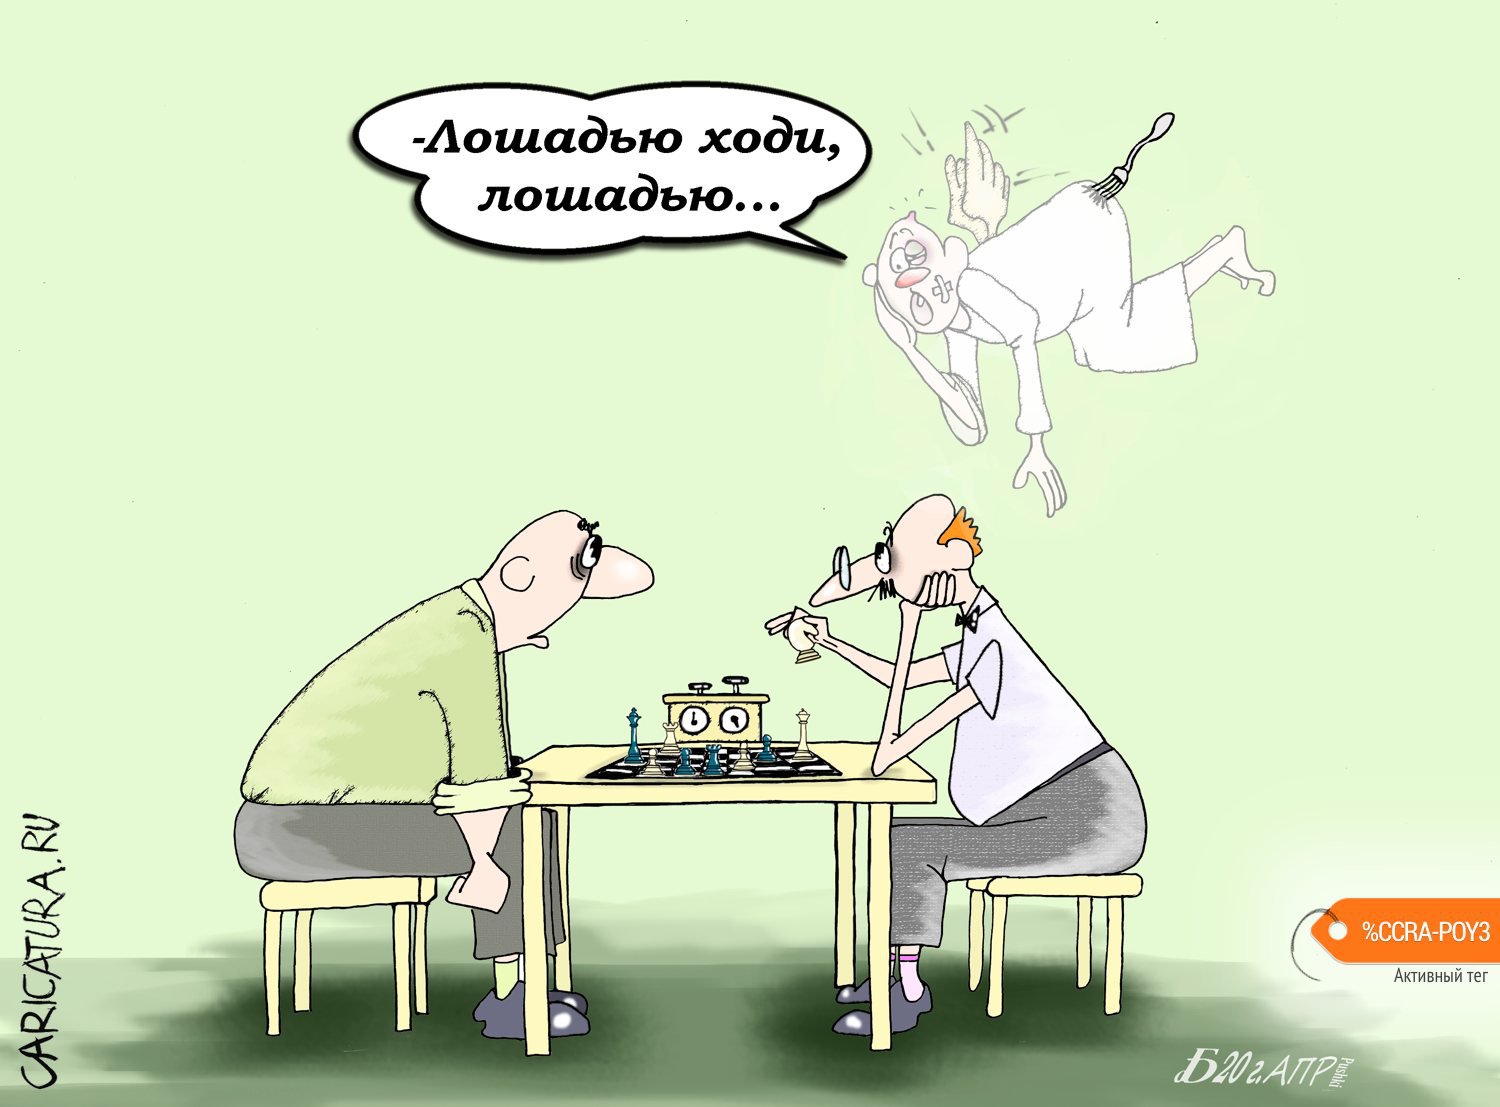 Карикатура "Про лошадьюхождение", Борис Демин